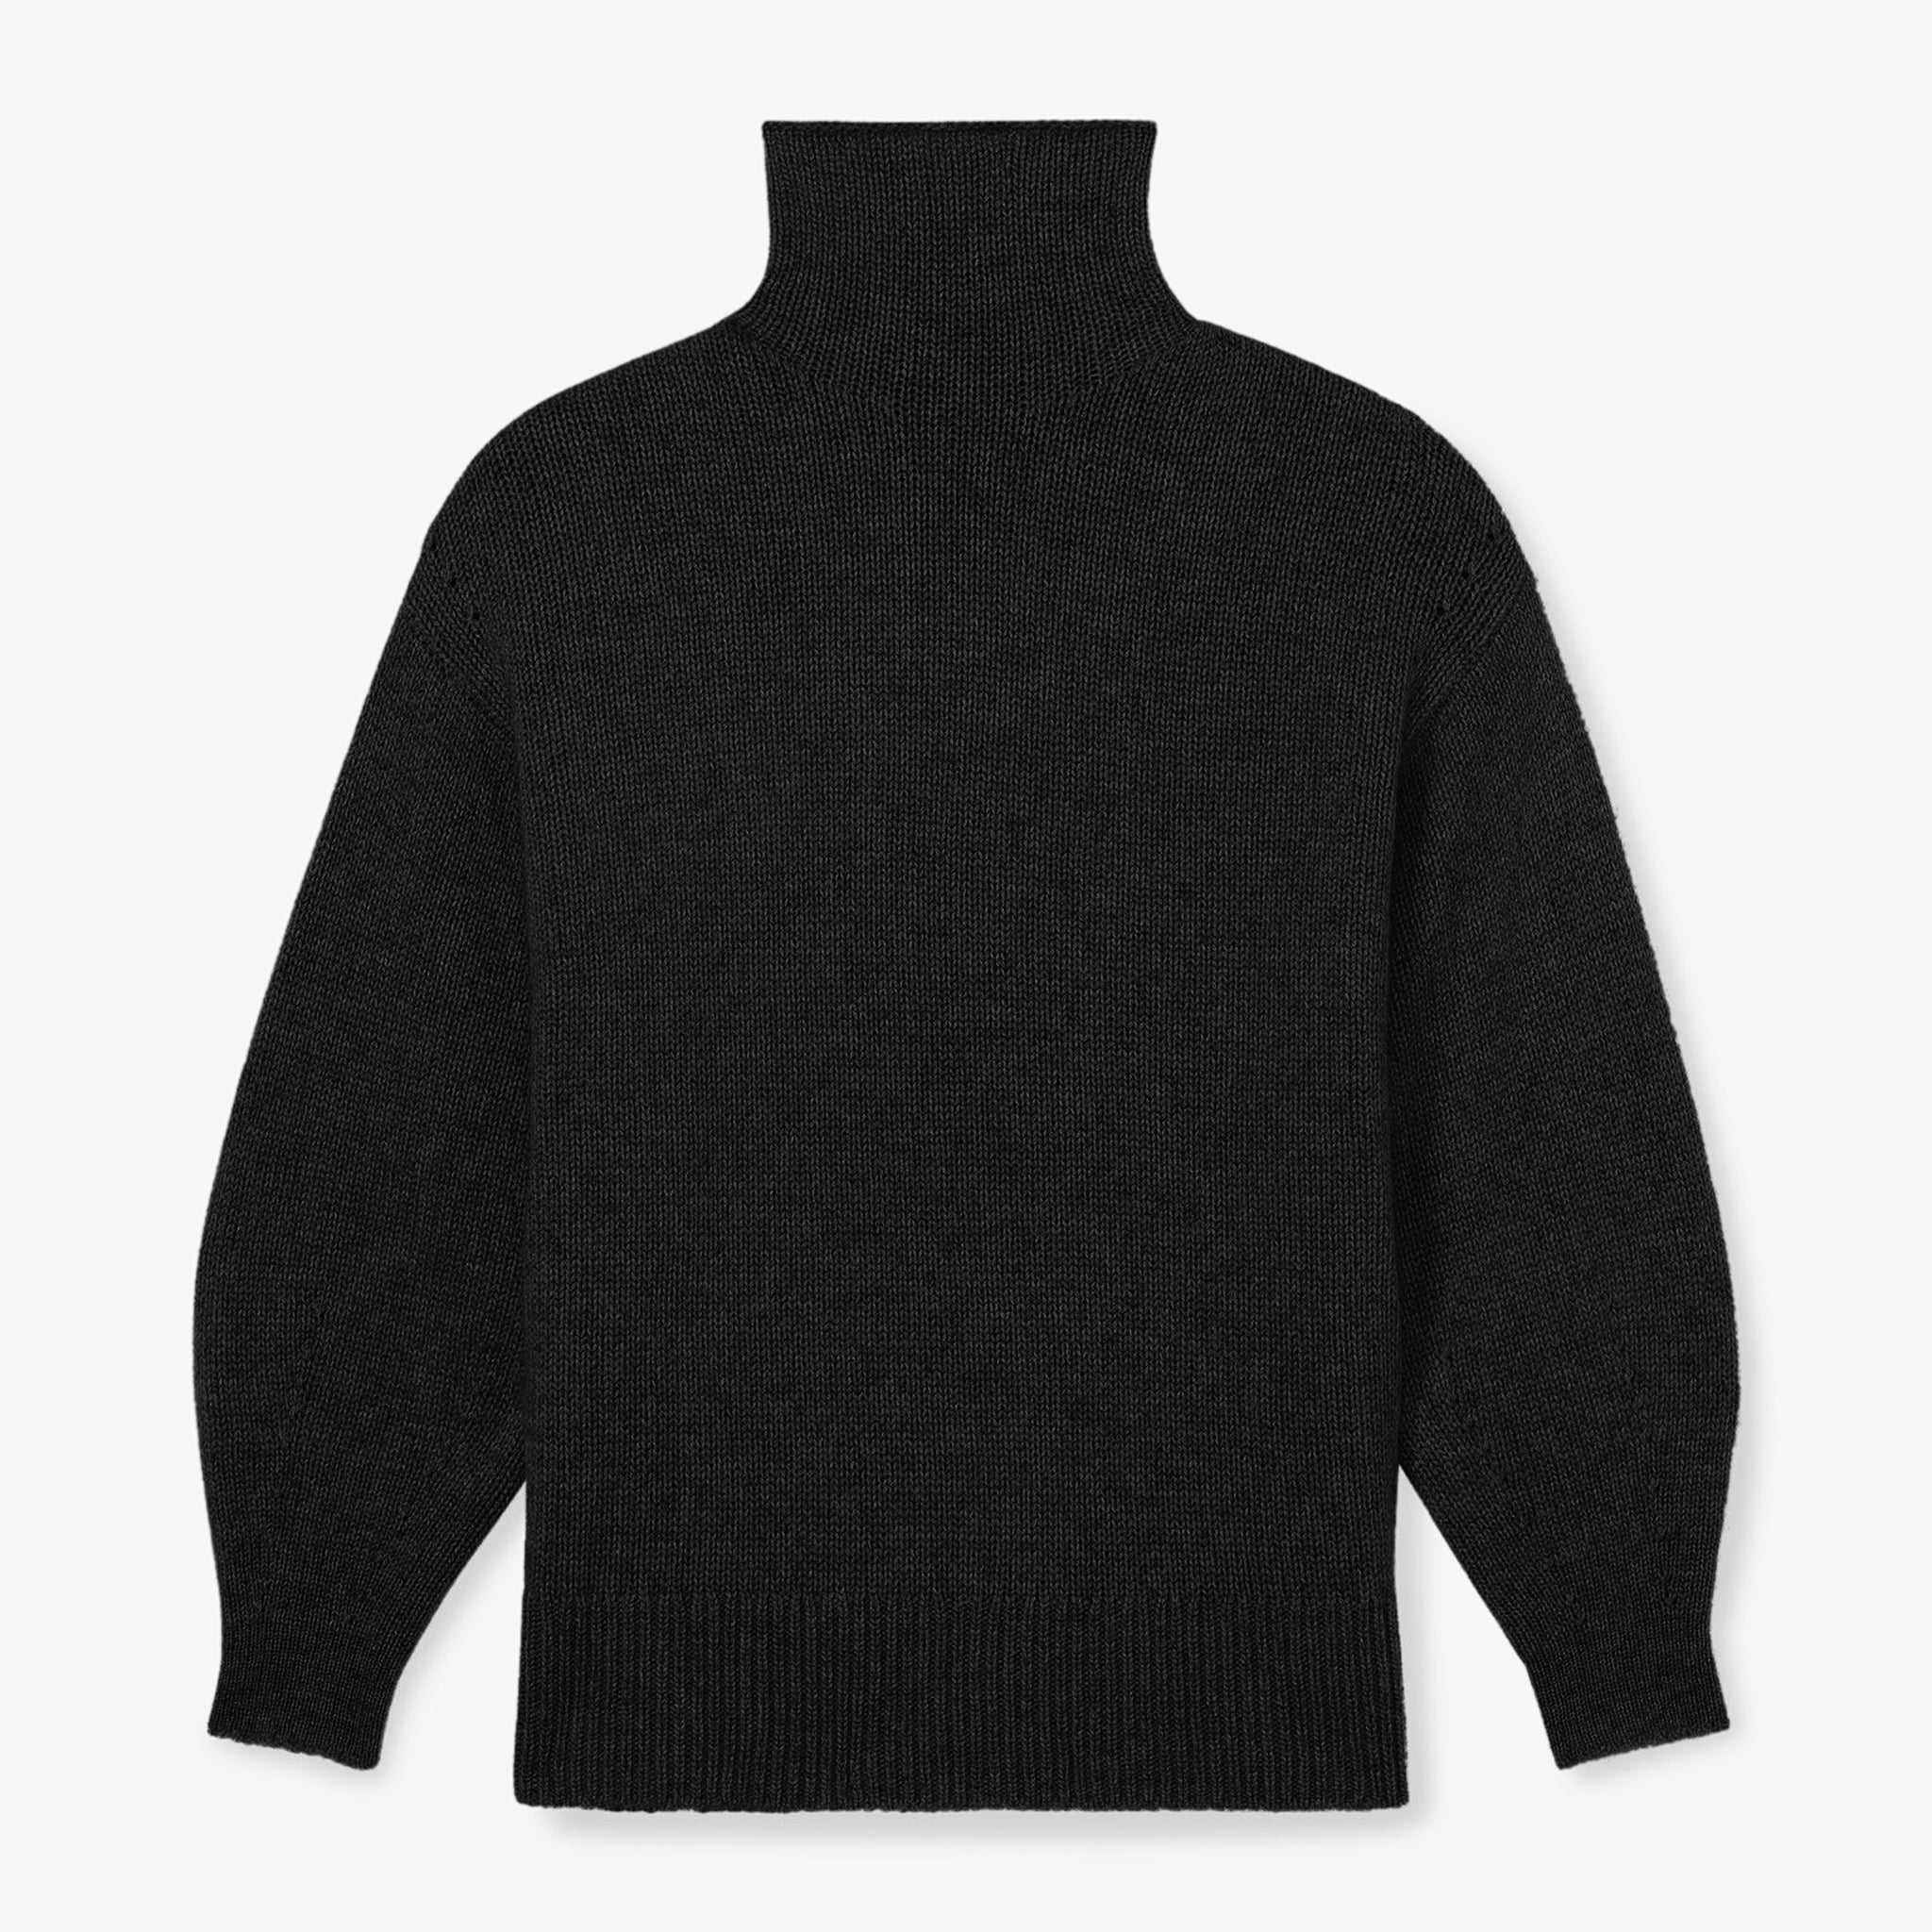 Packshot image of the lea sweater in black